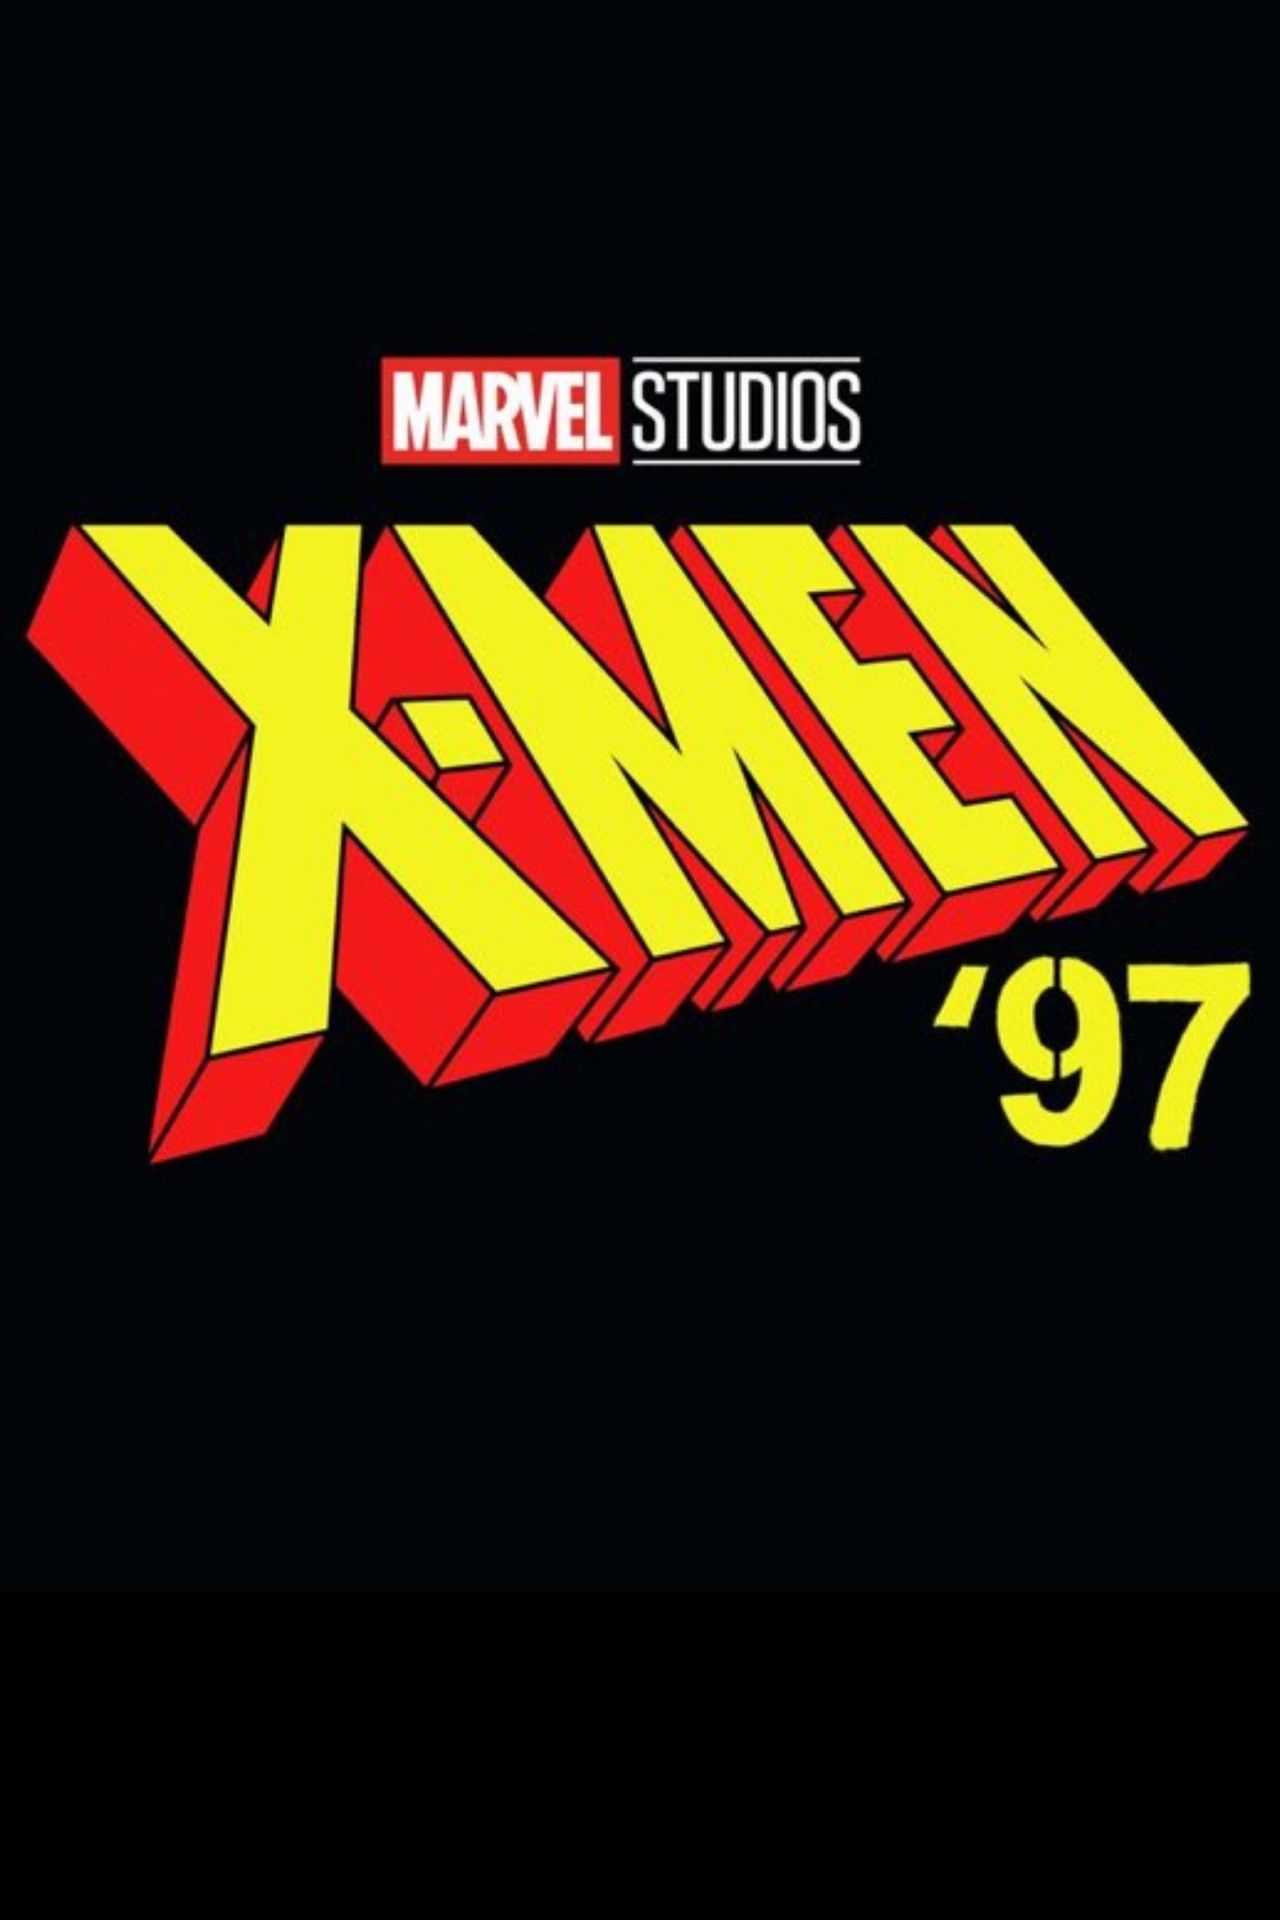 Official X-Men 97 logo